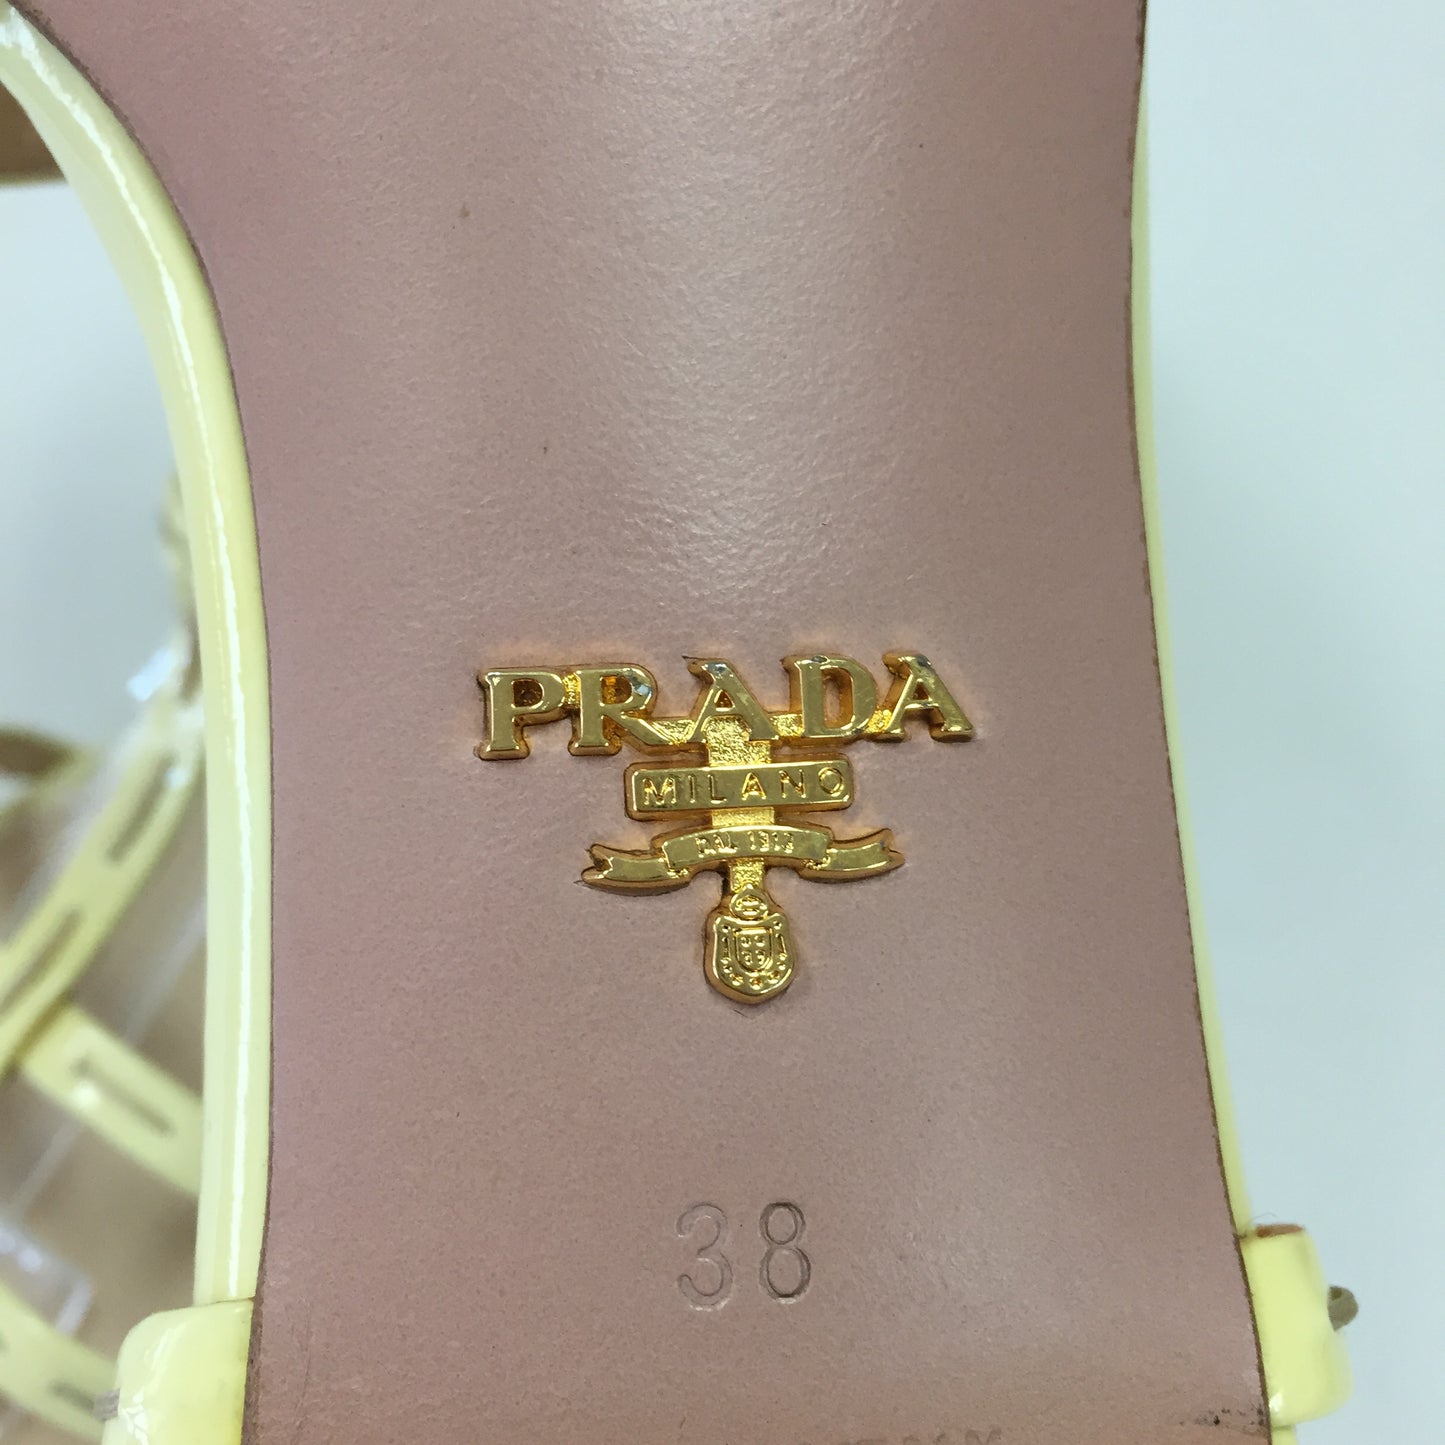 Authentic Prada Yellow Patent Flat Sandals Women's 38 / 7 - 7.5